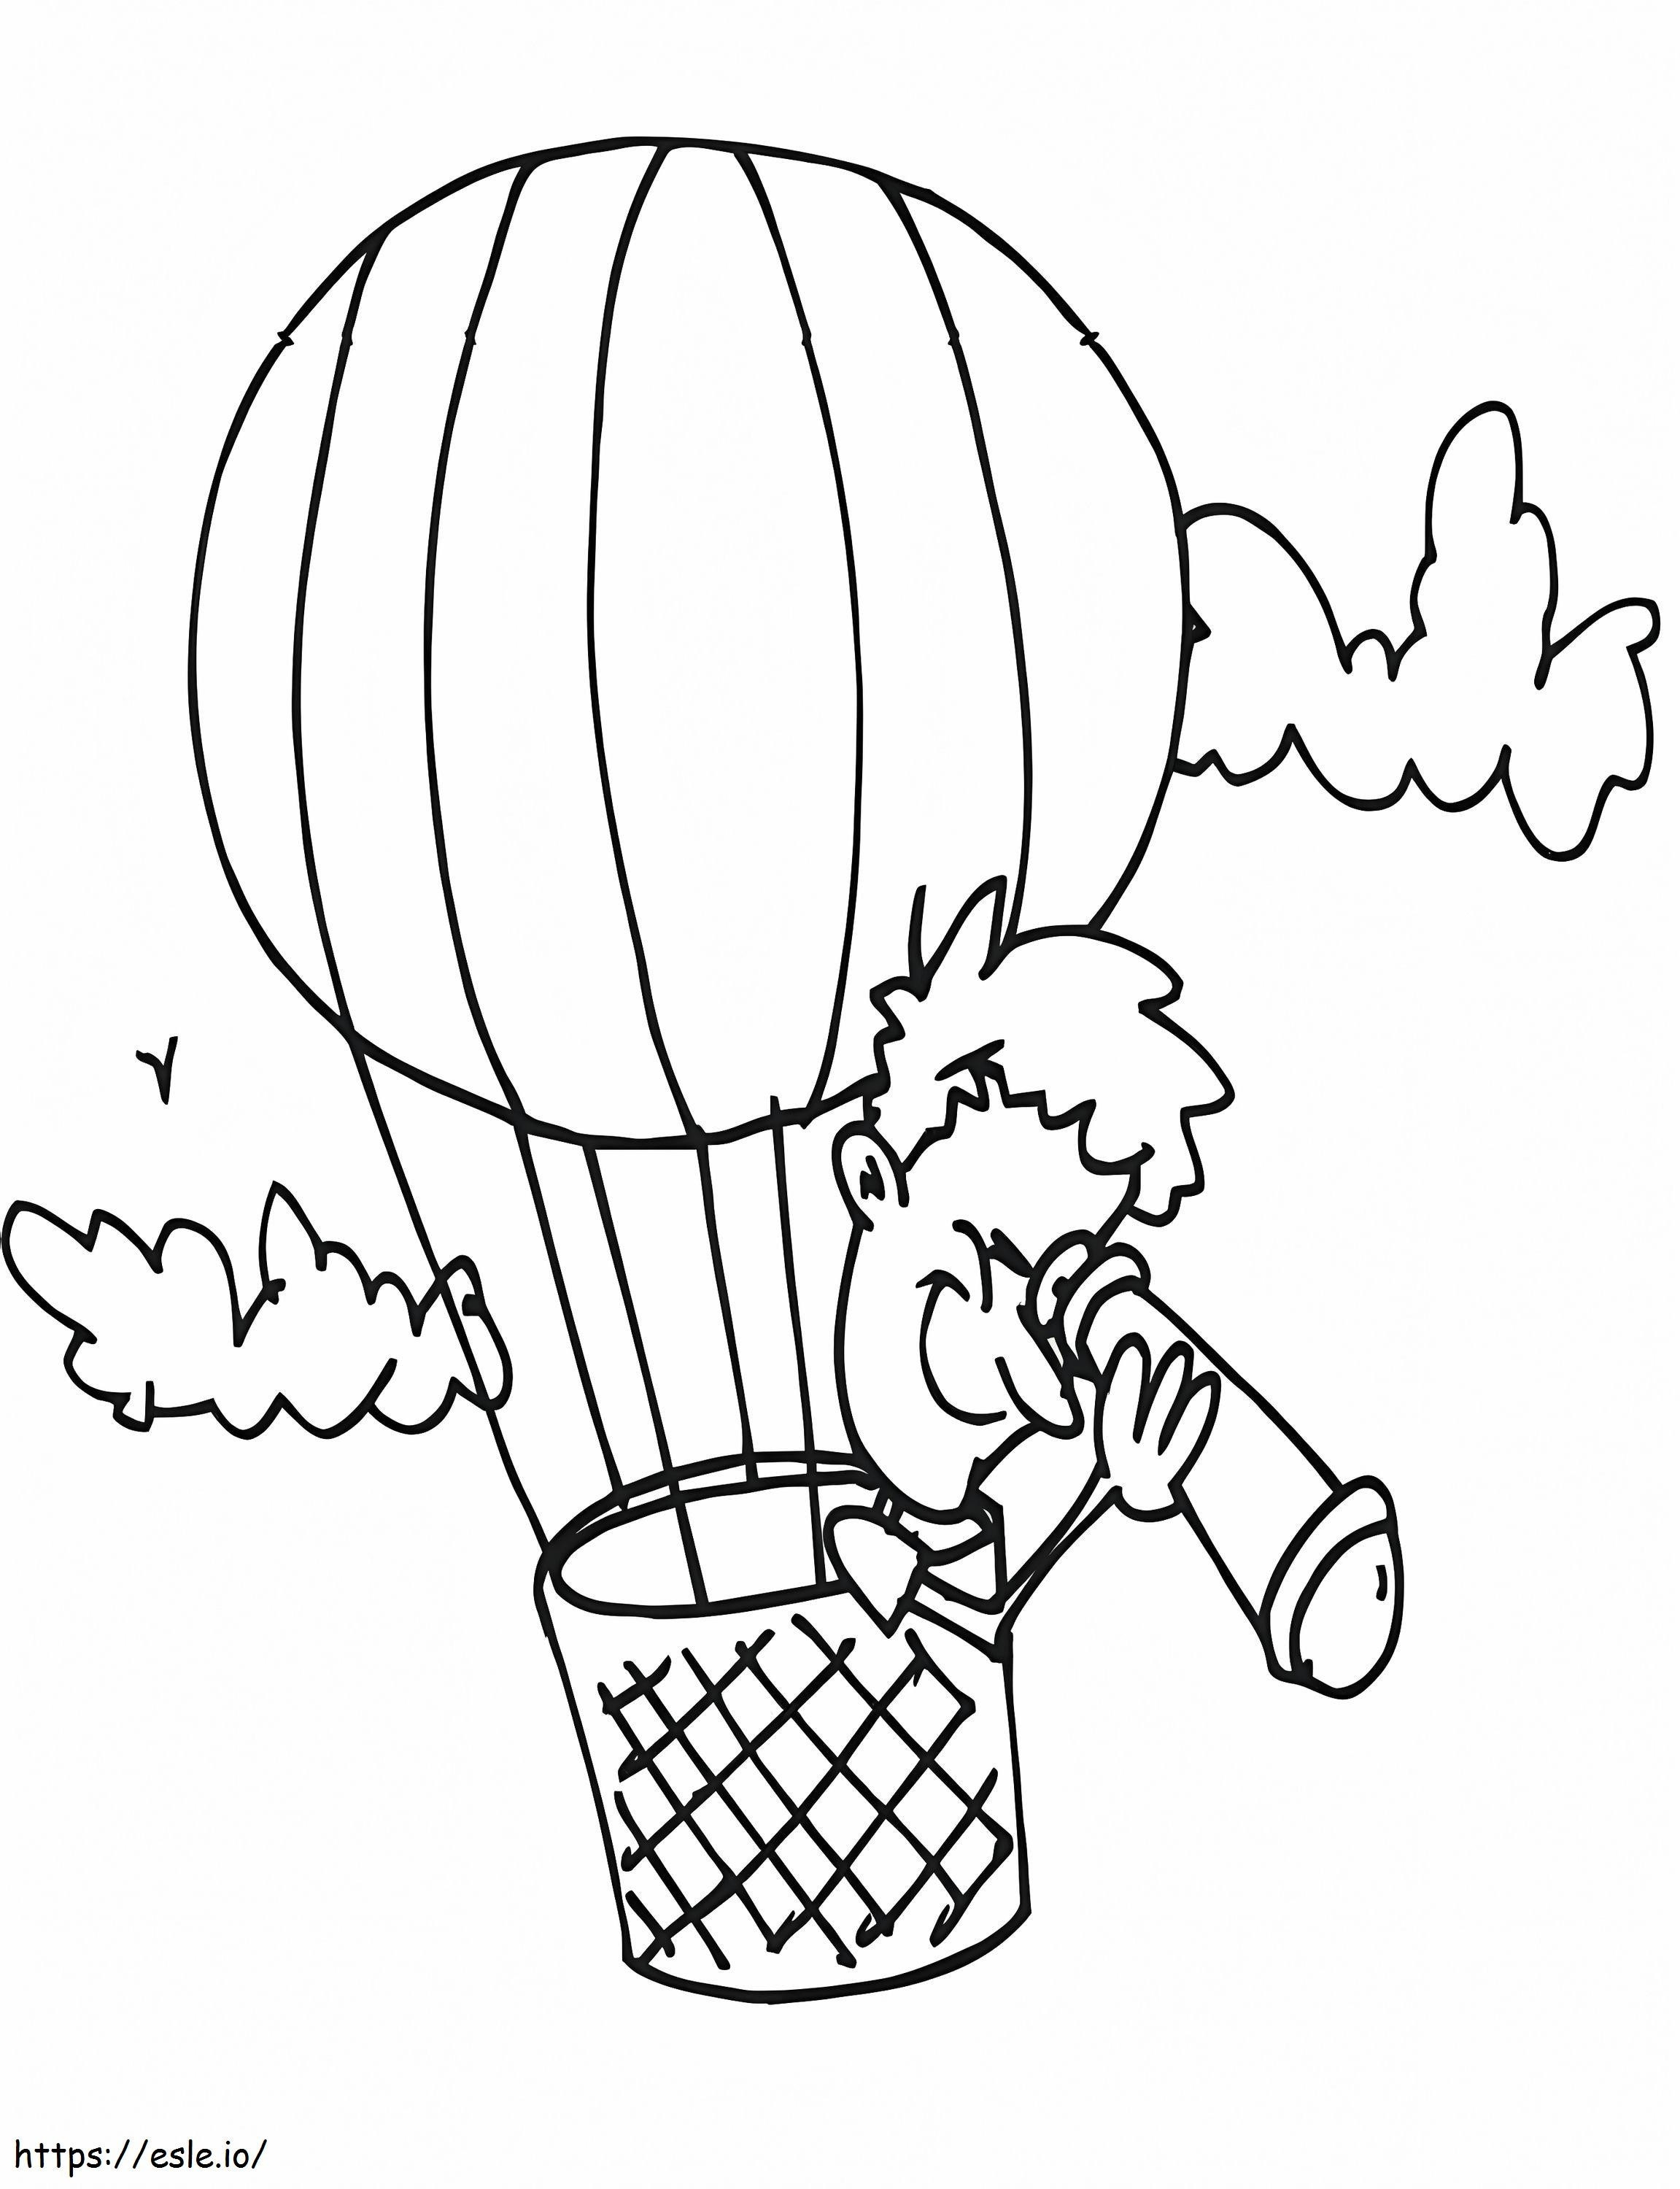 Normaler Heißluftballon 1 ausmalbilder